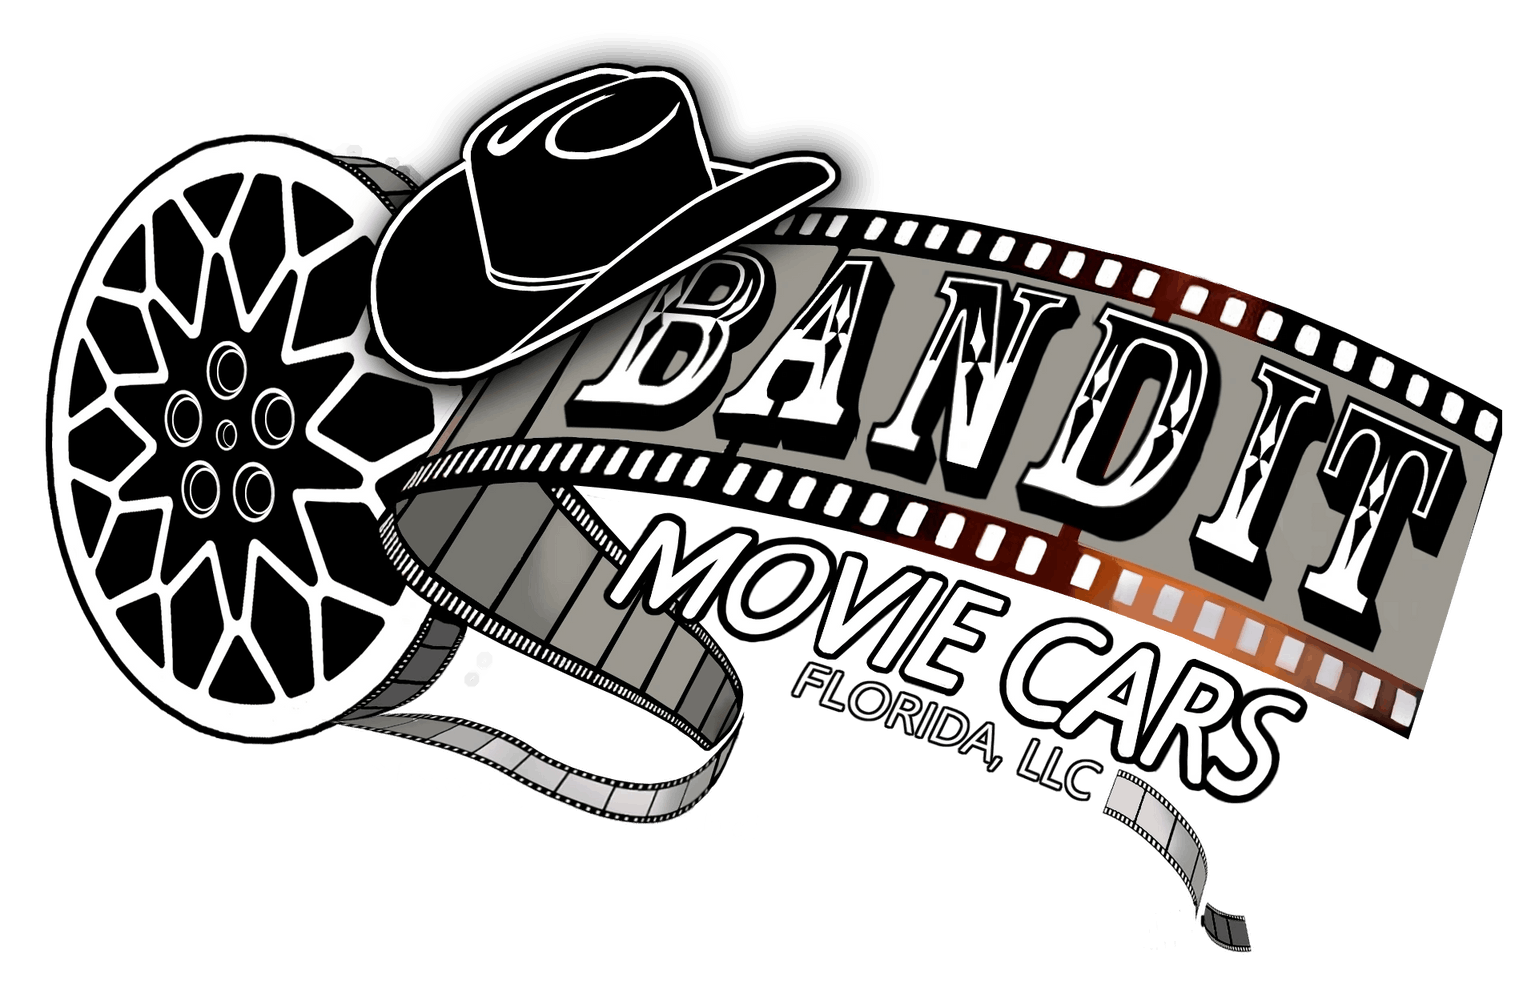 Bandit Movie Cars